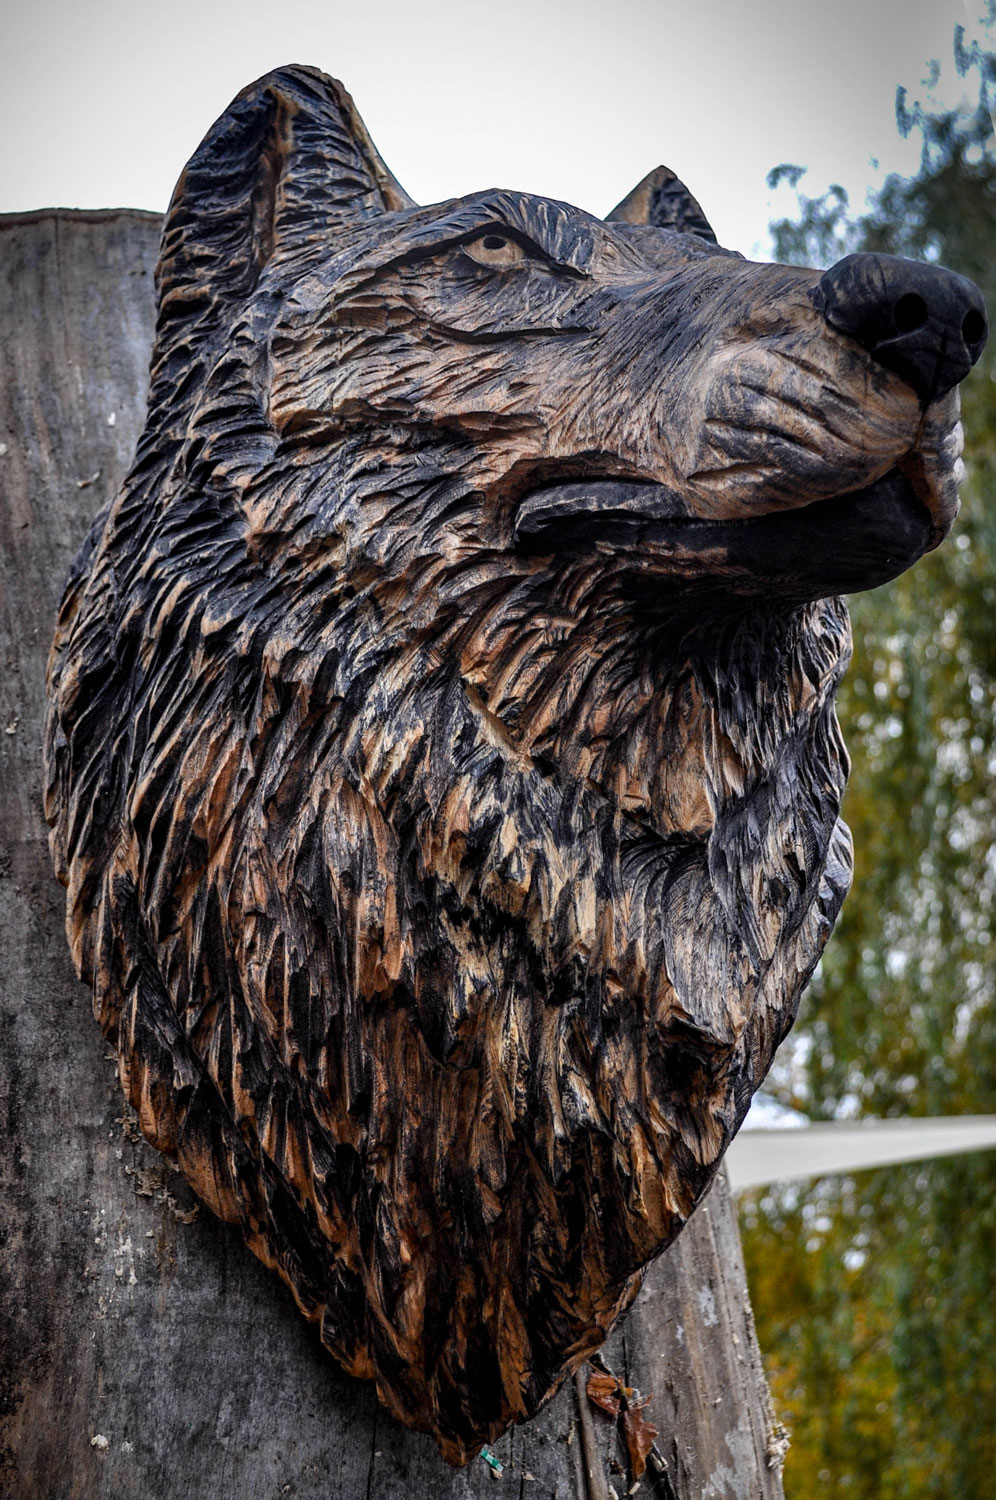 drevorezba-carving-wood-drevo-busta-vlk-hlava-vyrezavani-rezbar-radekzdrazil-20201102-05